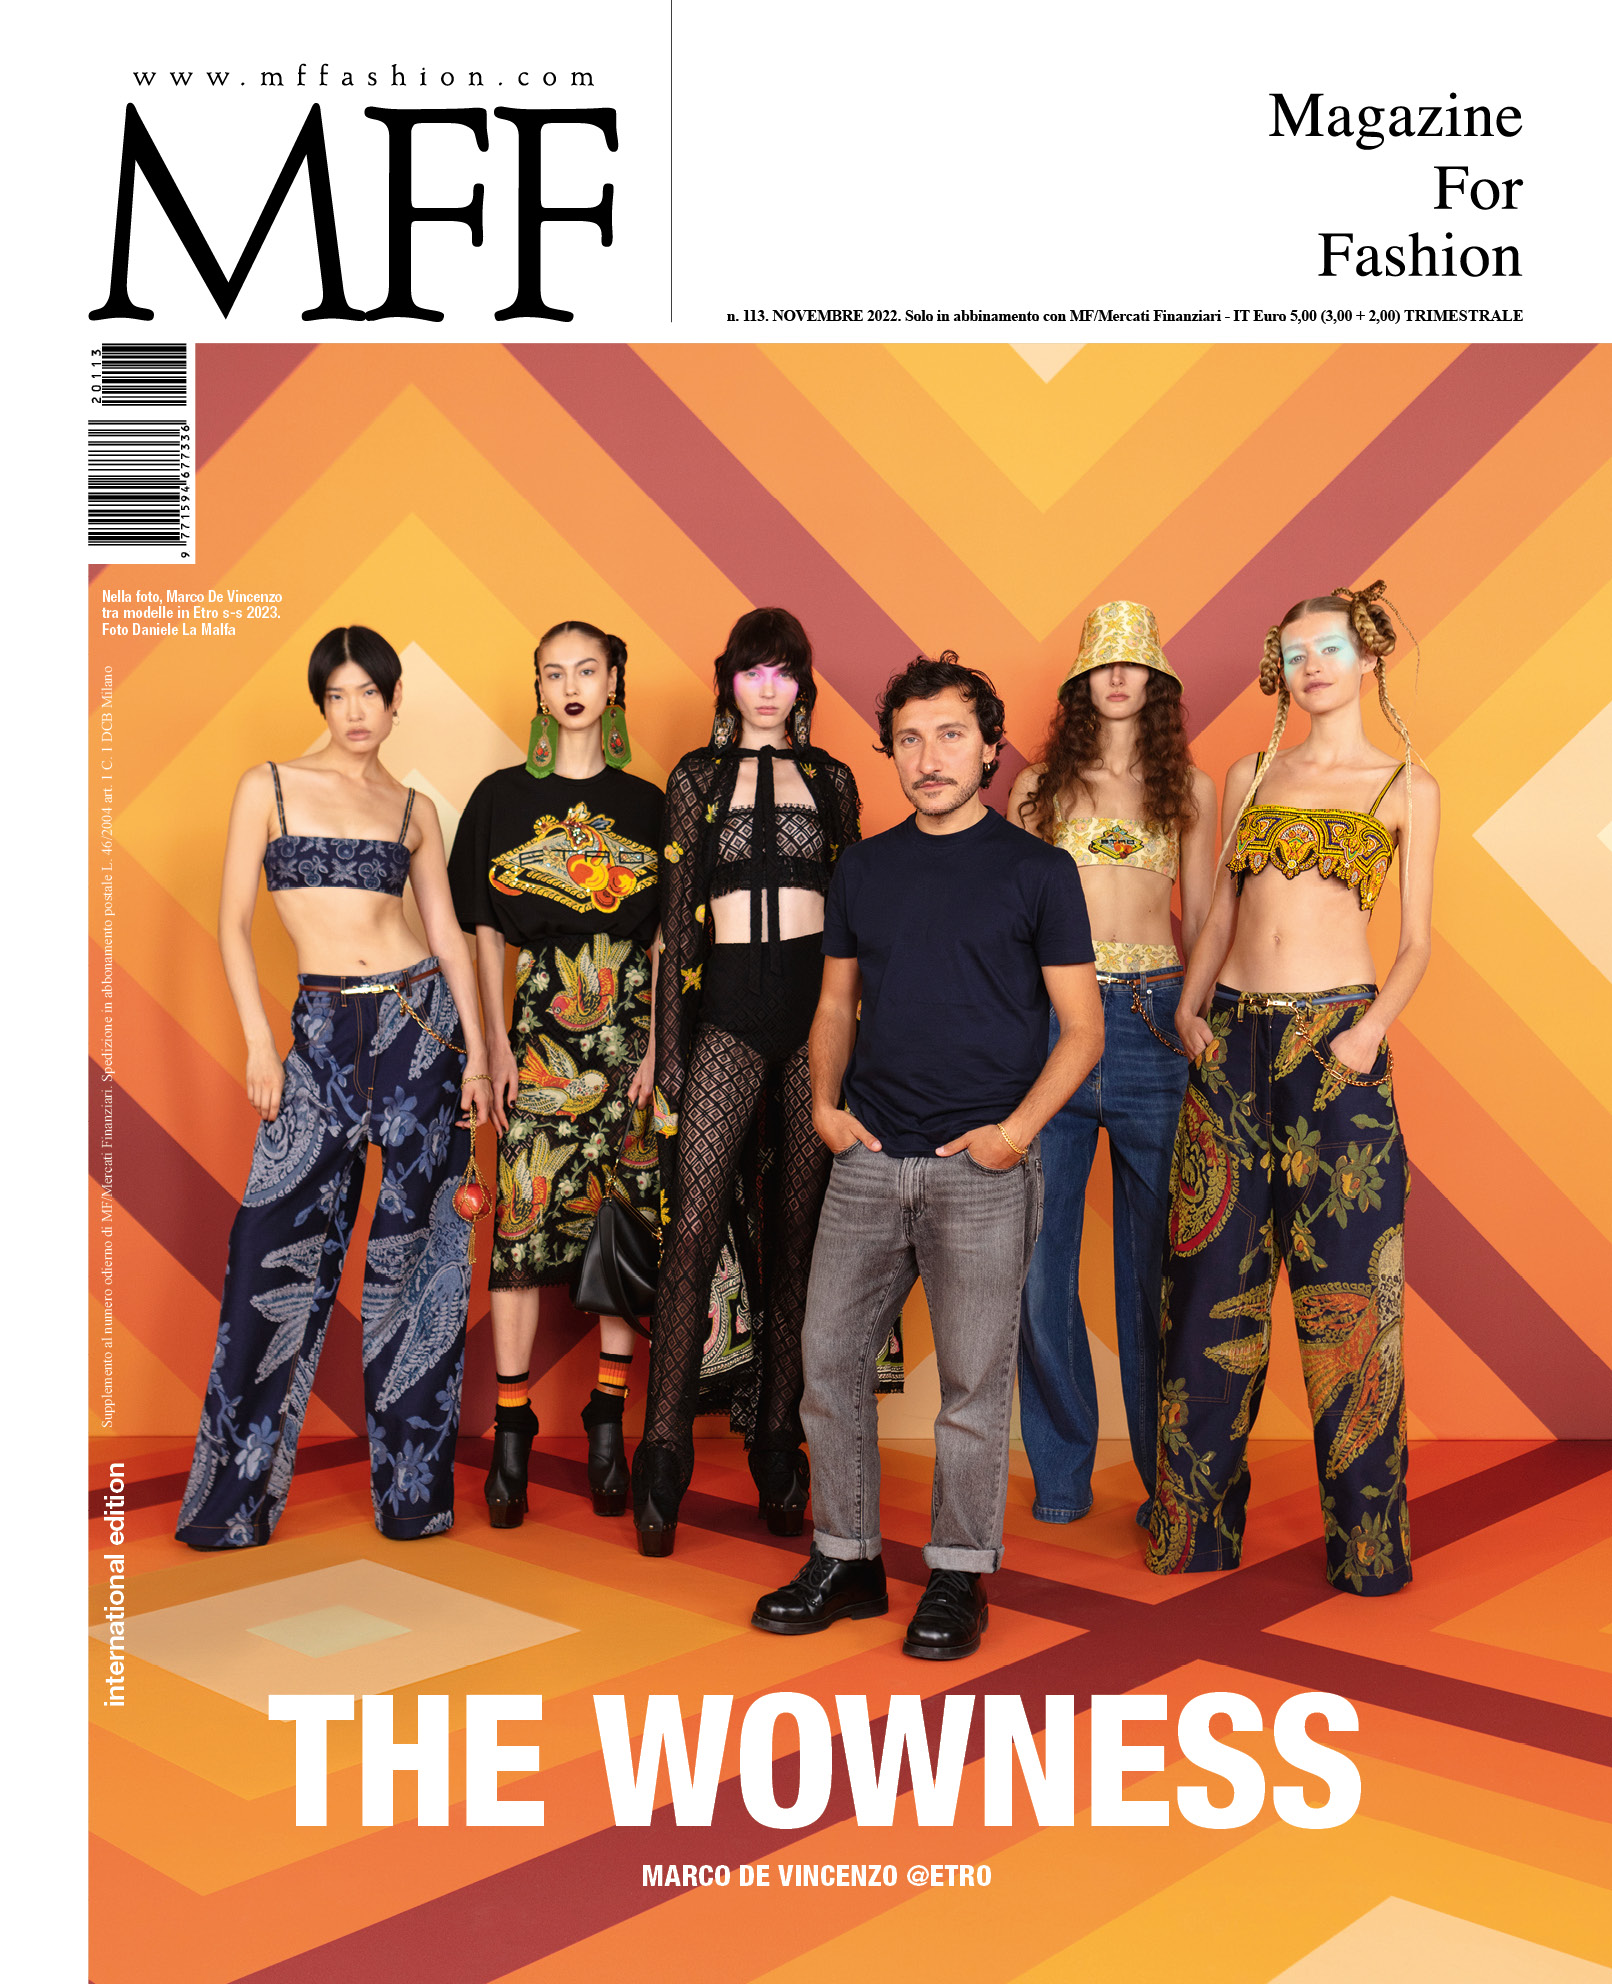 MFFMagazine For Fashion 113